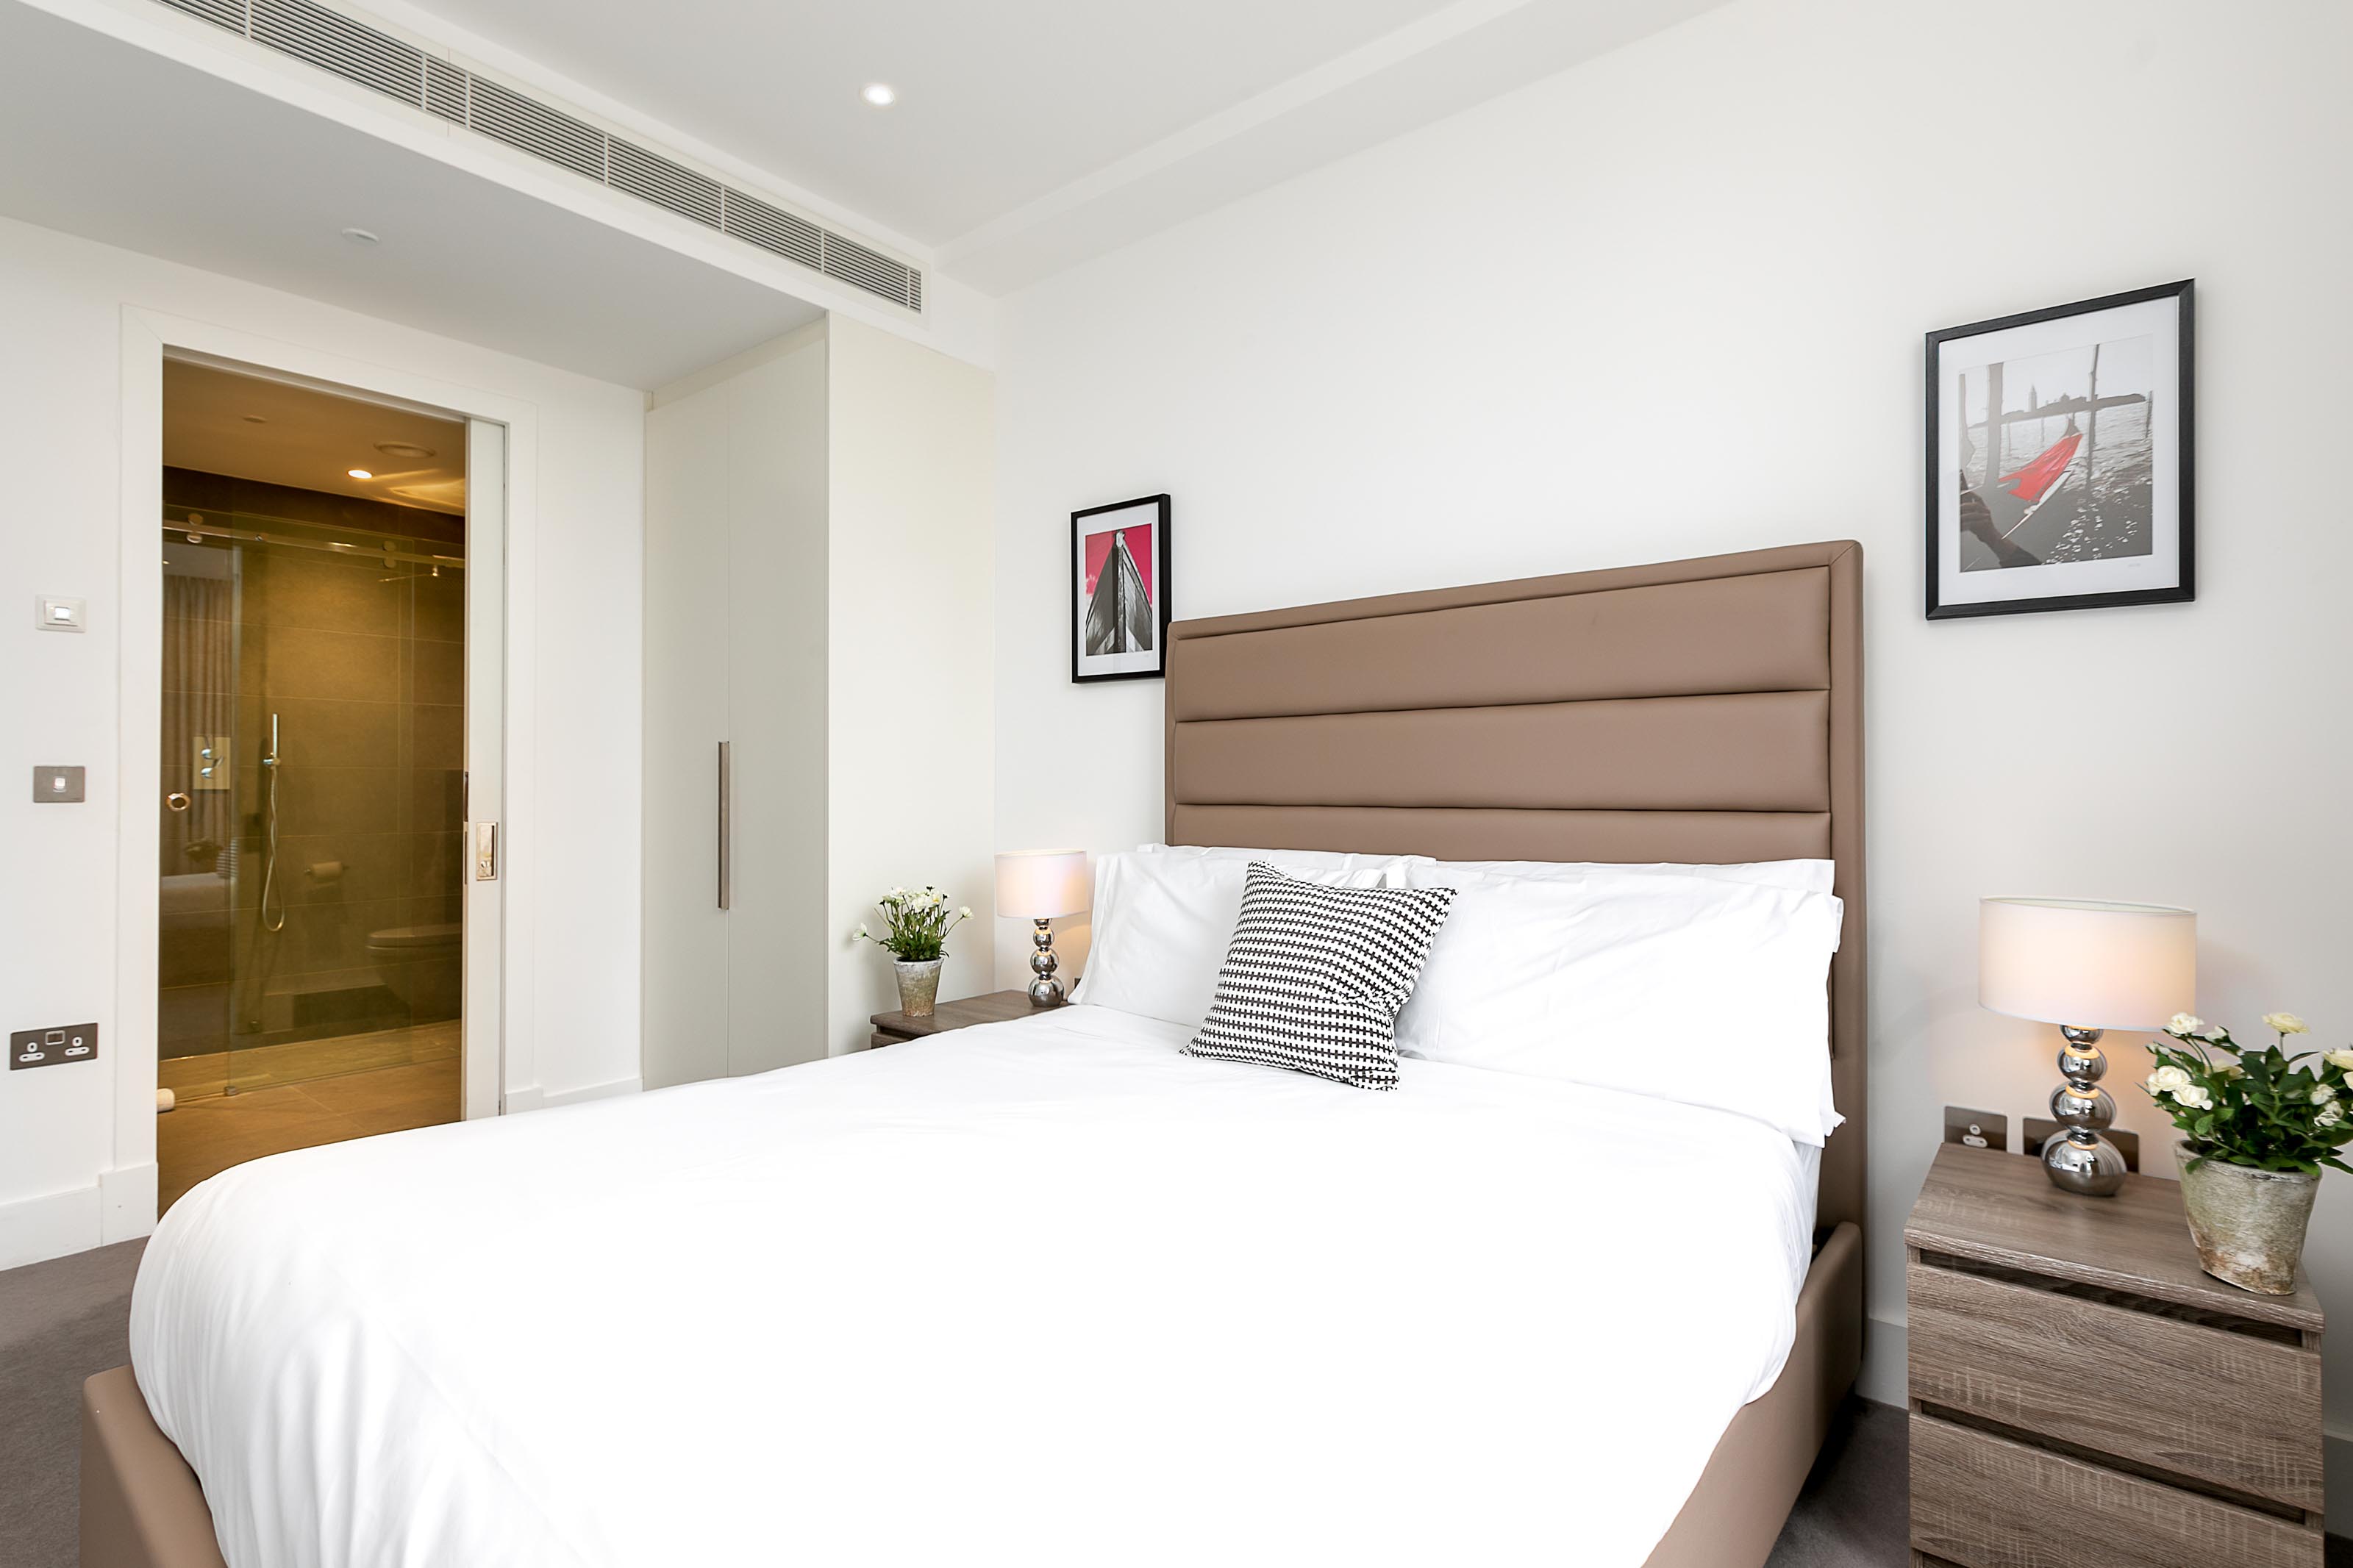 Lovelydays luxury service apartment rental - London - Covent Garden - Prince's House 506 - Lovelysuite - 2 bedrooms - 2 bathrooms - Double bed - 55c50b8f1cf4 - Lovelydays